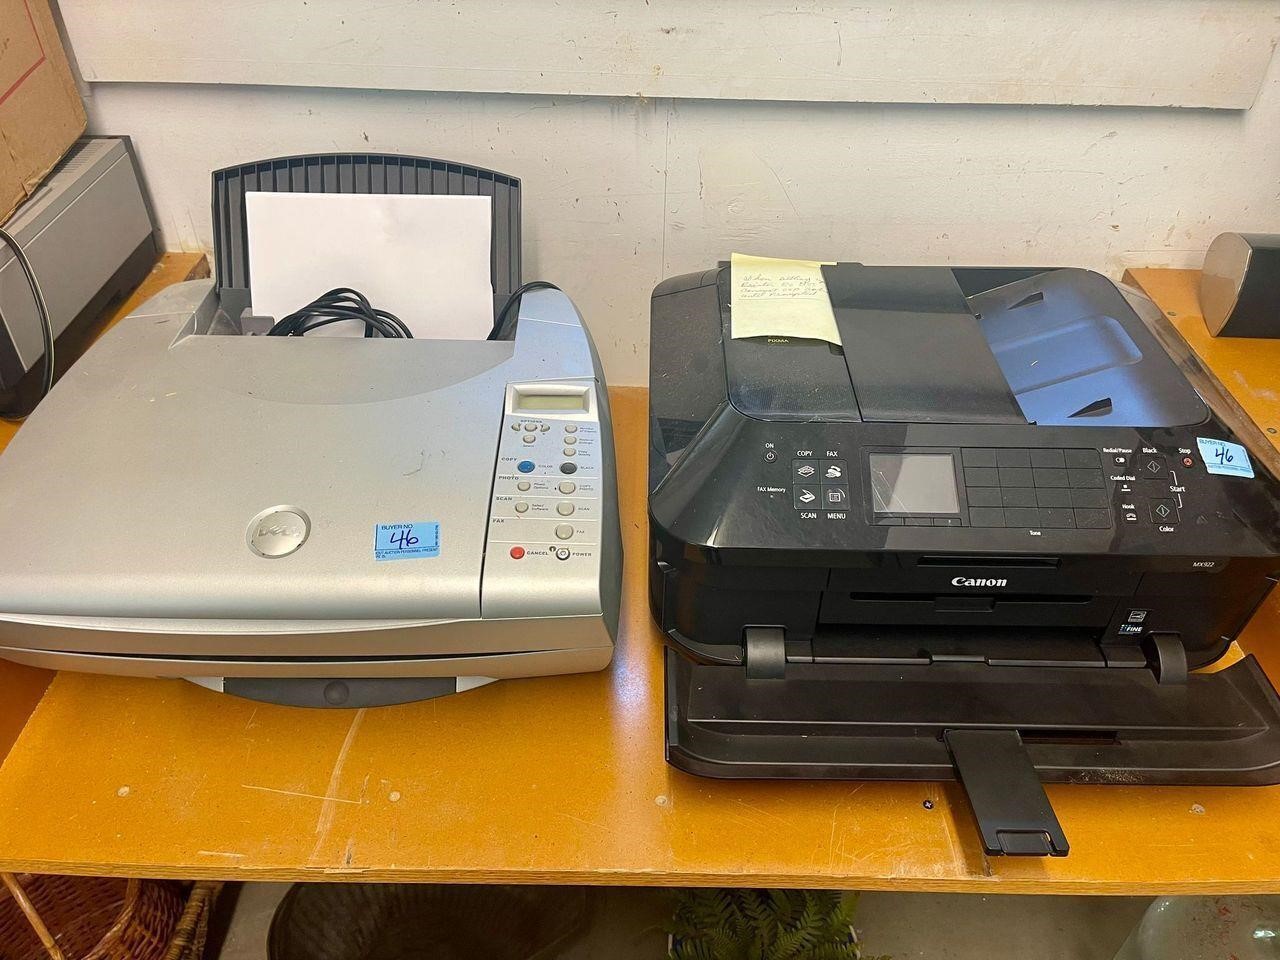 Canon Printer and Dell printer with paper